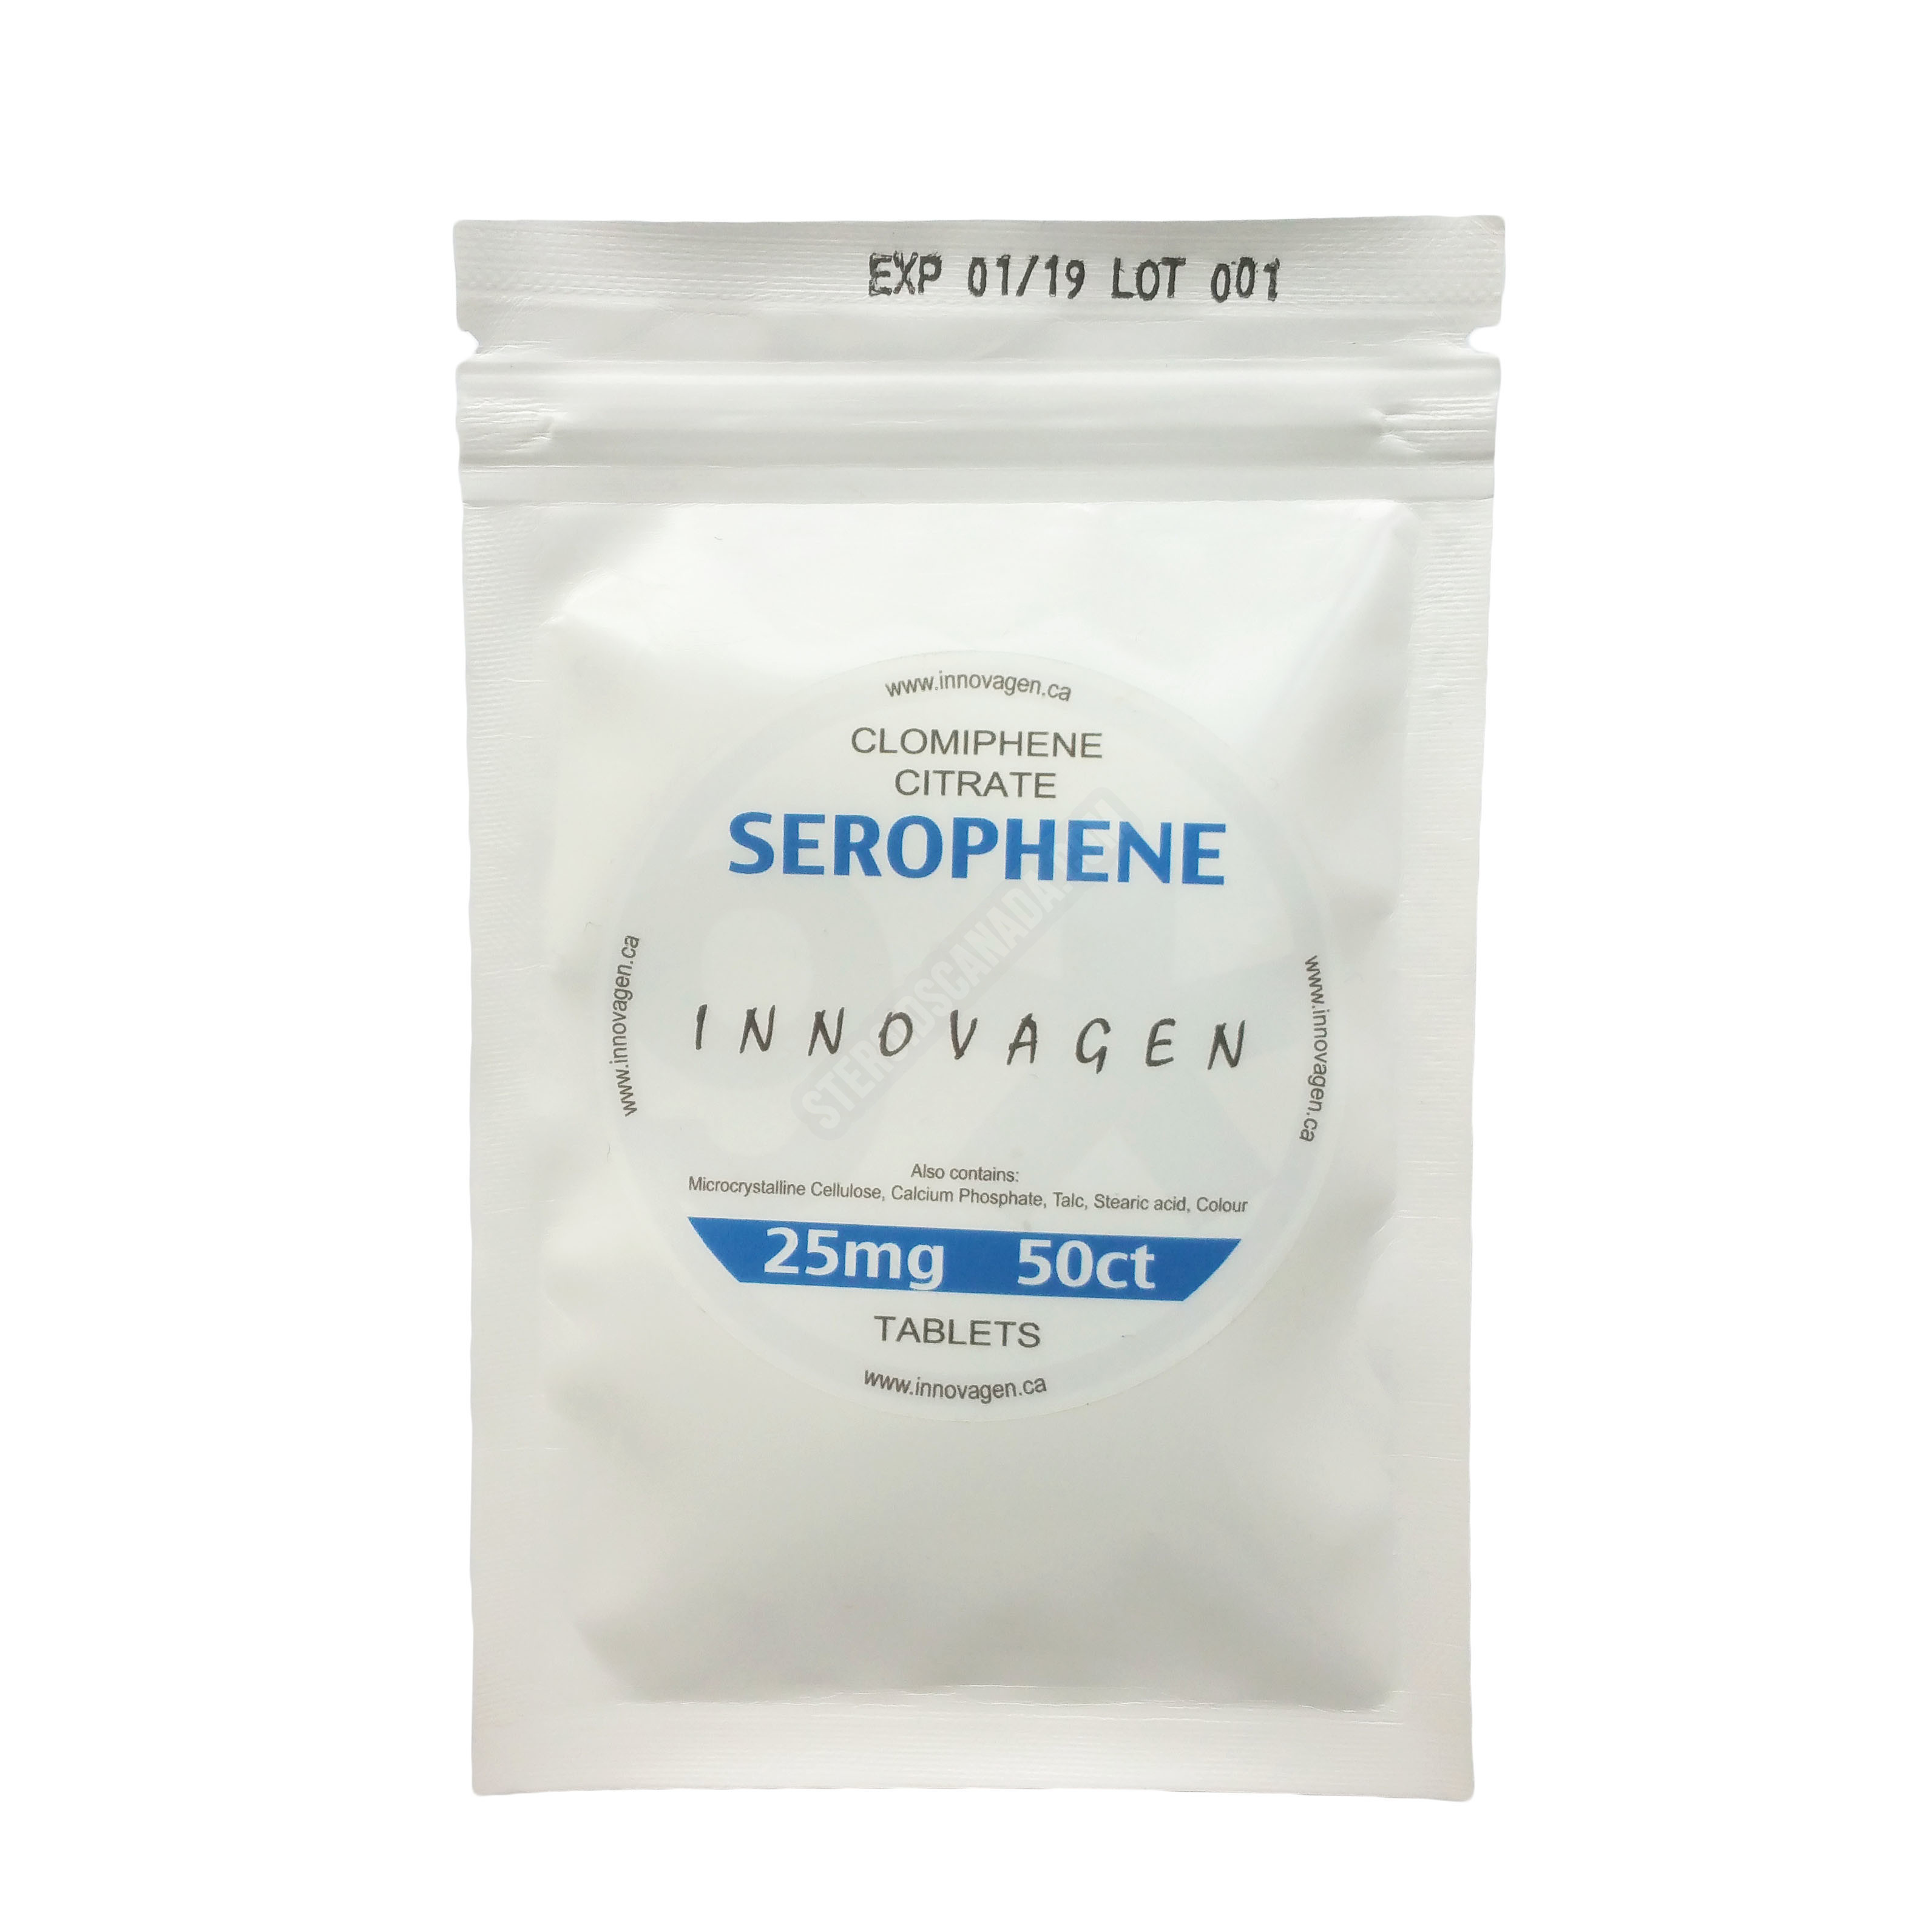 Serophene